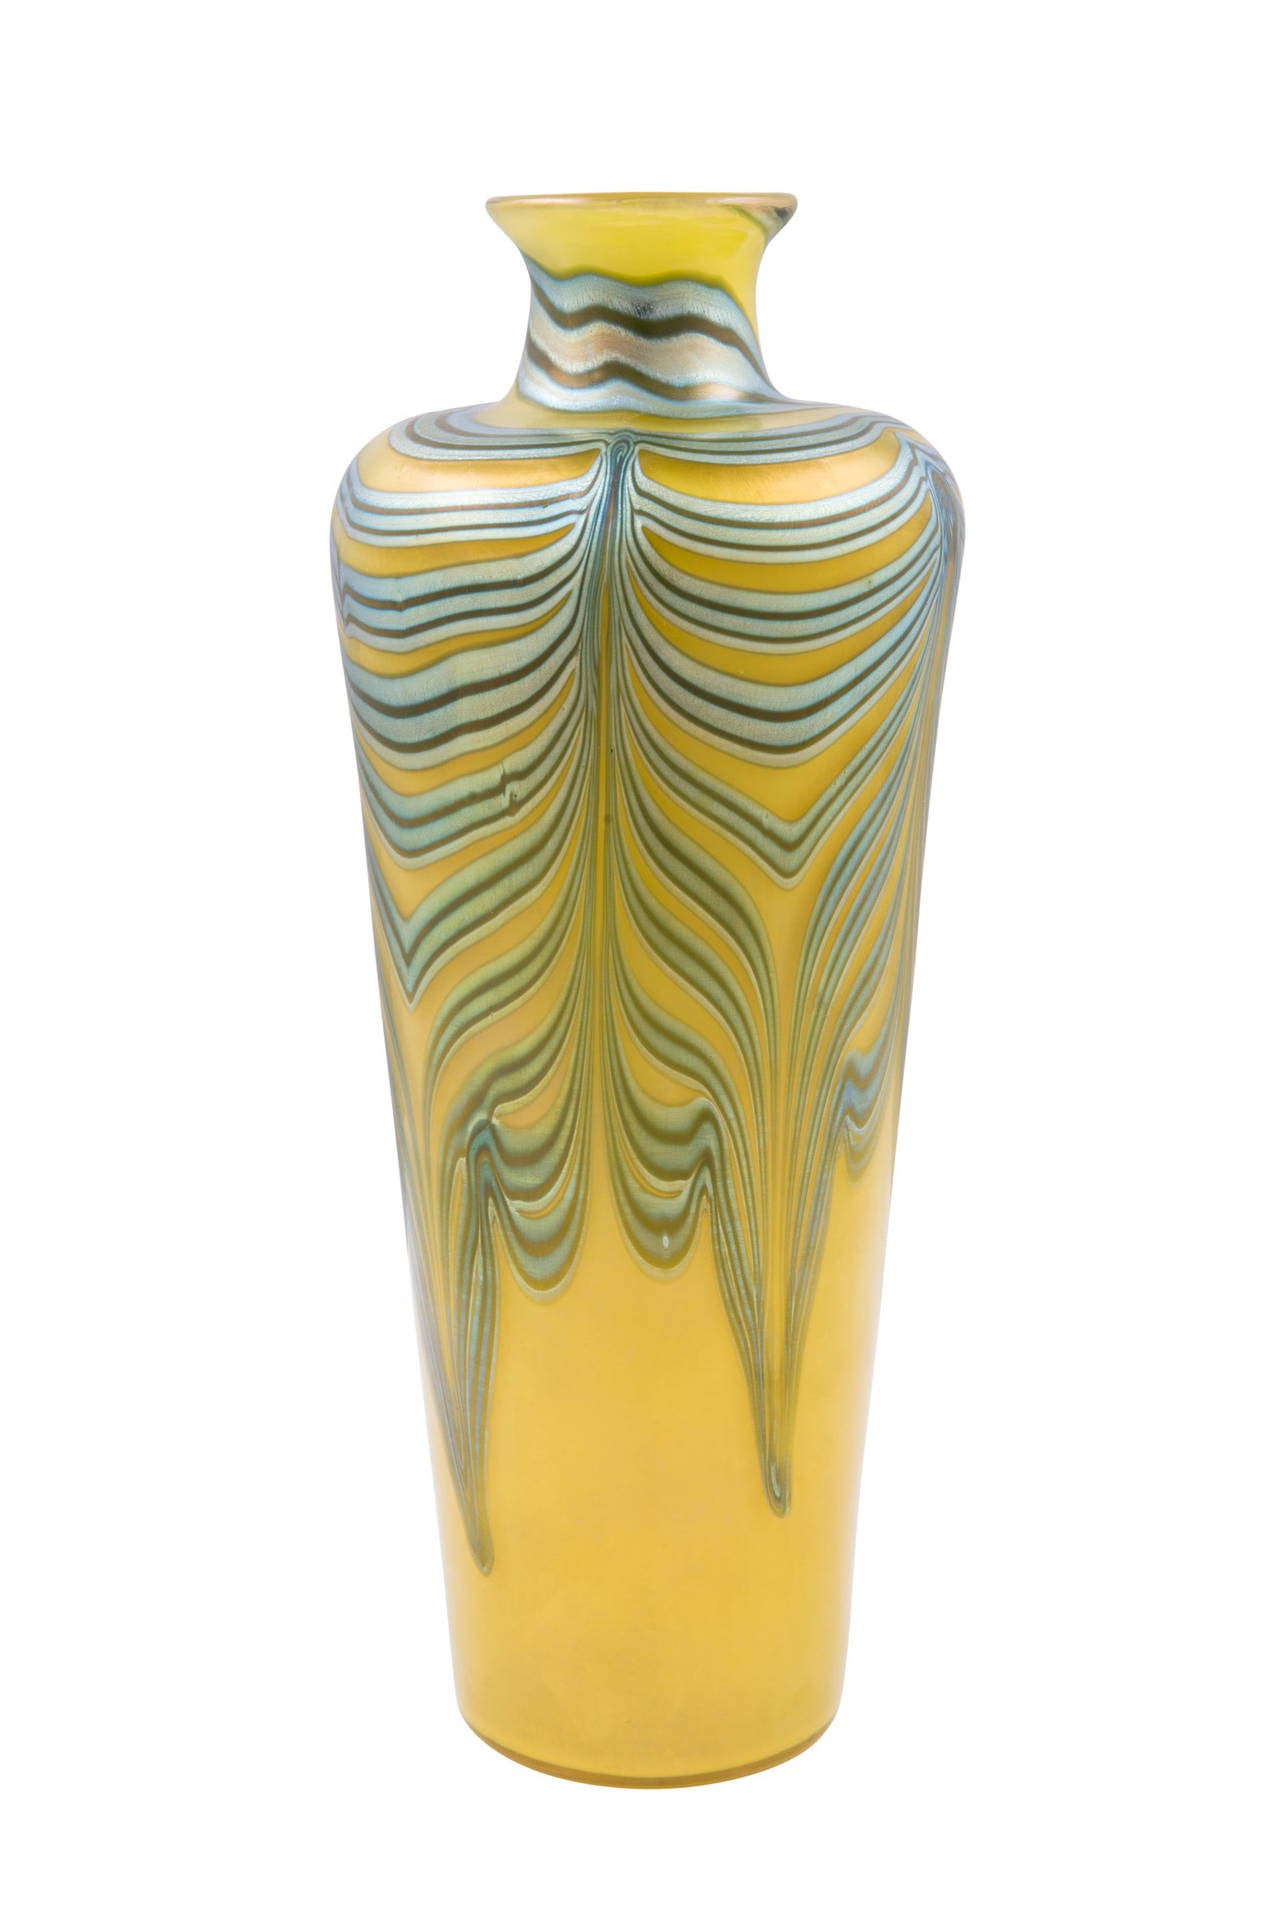 Art Nouveau Loetz Signed Early Monumental Vase Phenomen Gre 829, circa 1900